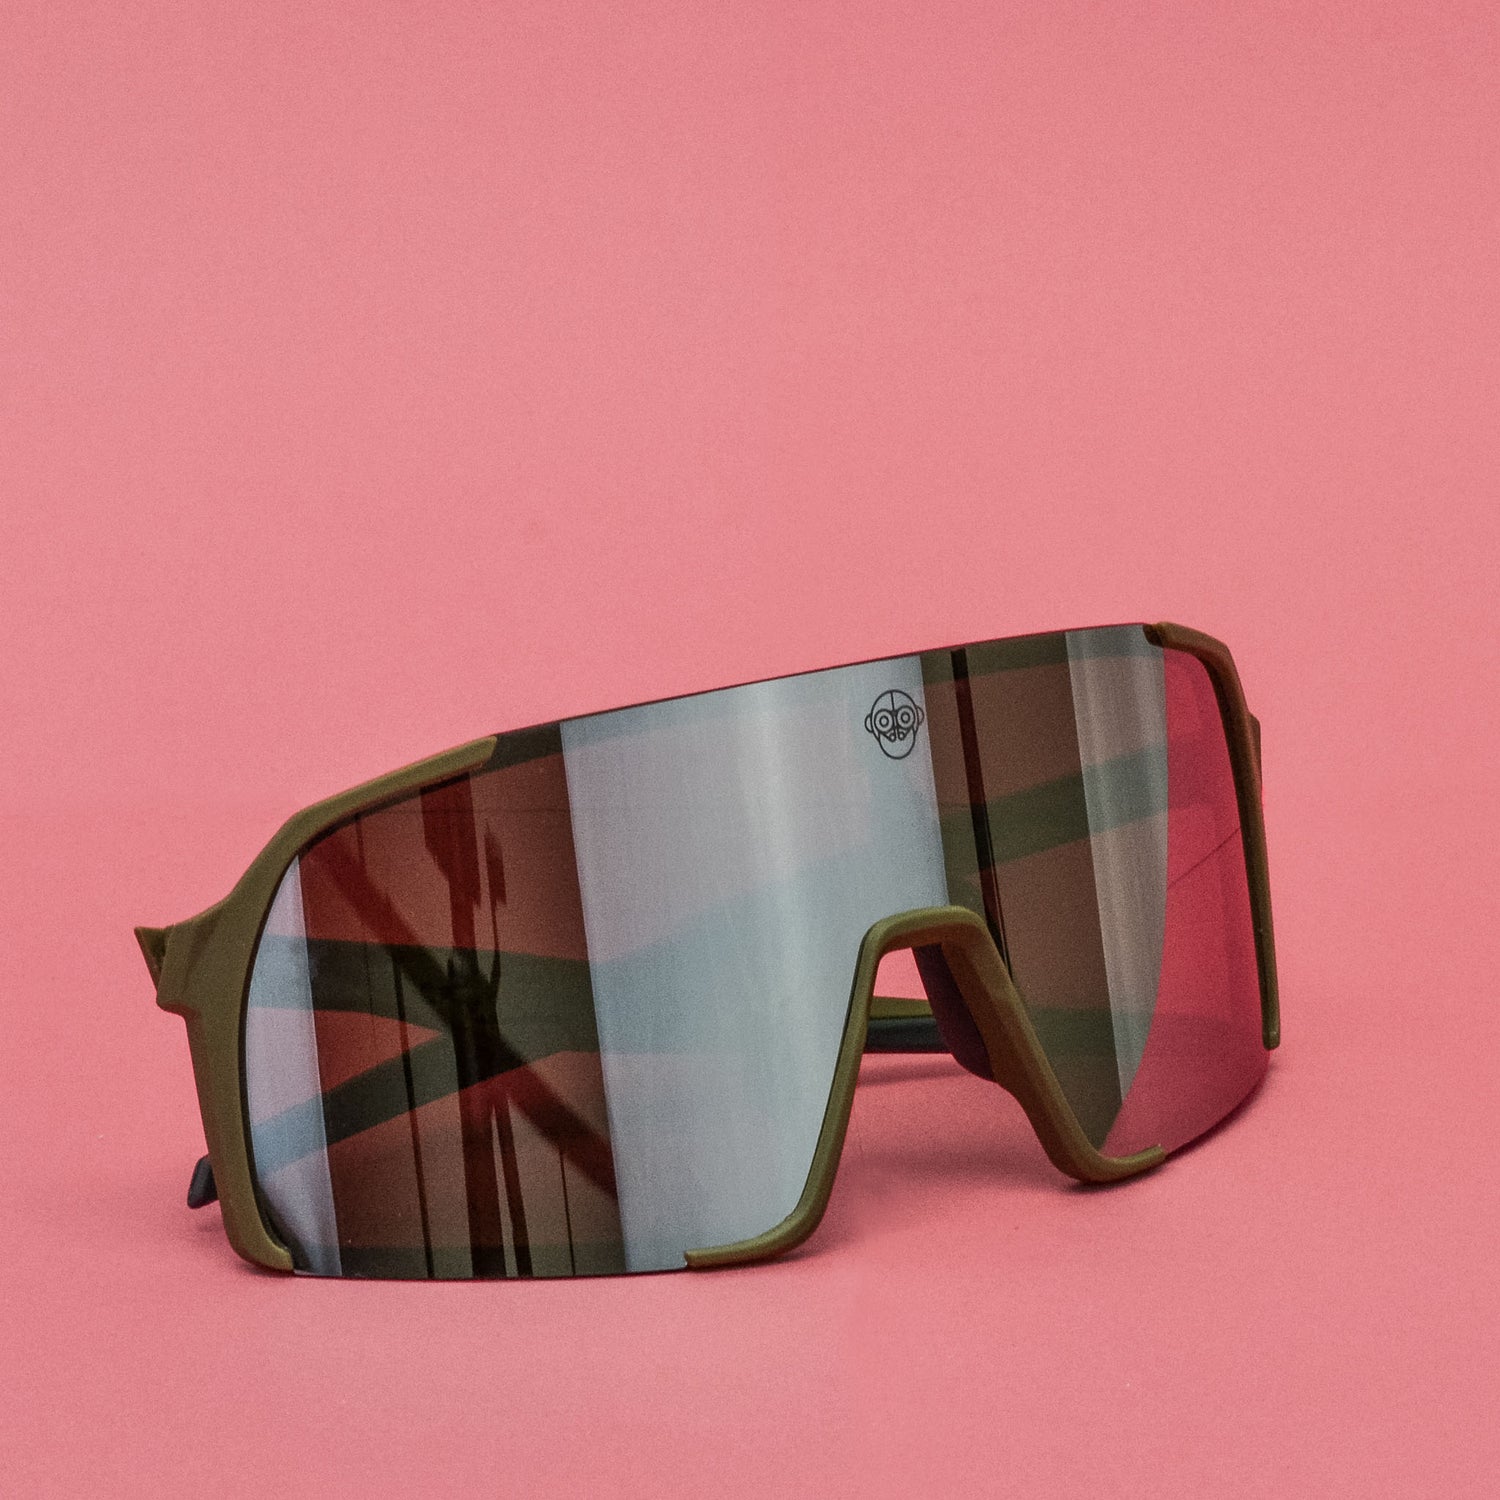 A.P.E. Optics Vega Evo Sunglasses (Matte Olive w/ Silver Mirror Lens)